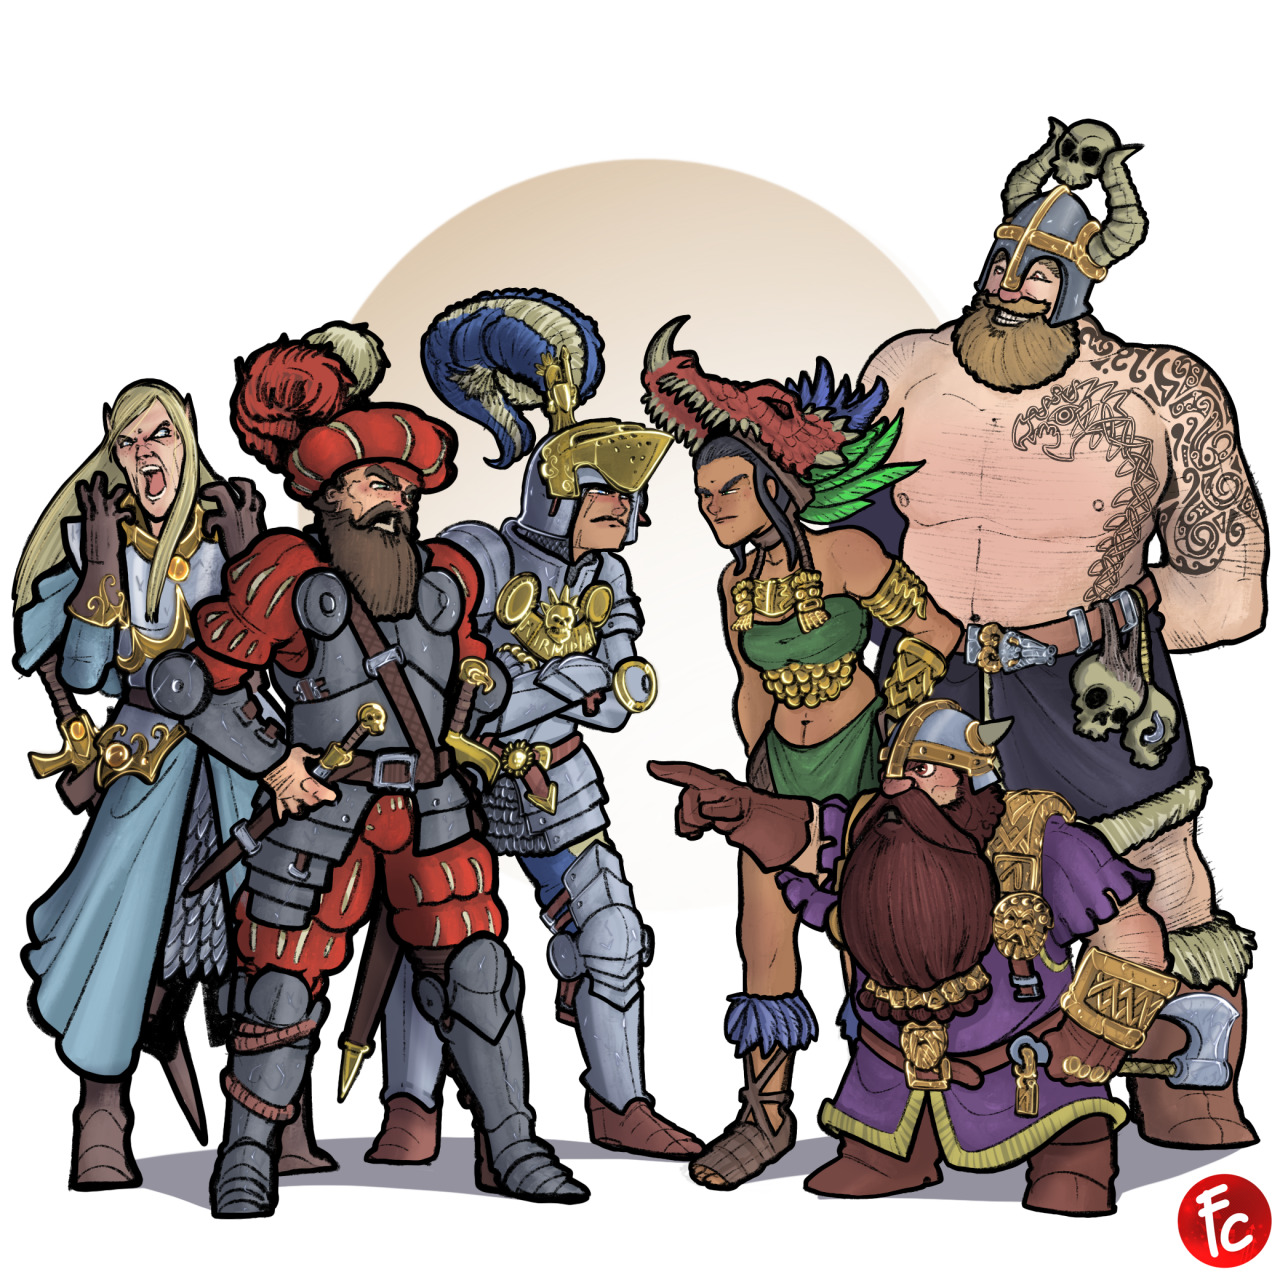 Orco greenskinz guerreros Warrior schildbeschlag aos Warhammer Fantasy Bitz 1540 